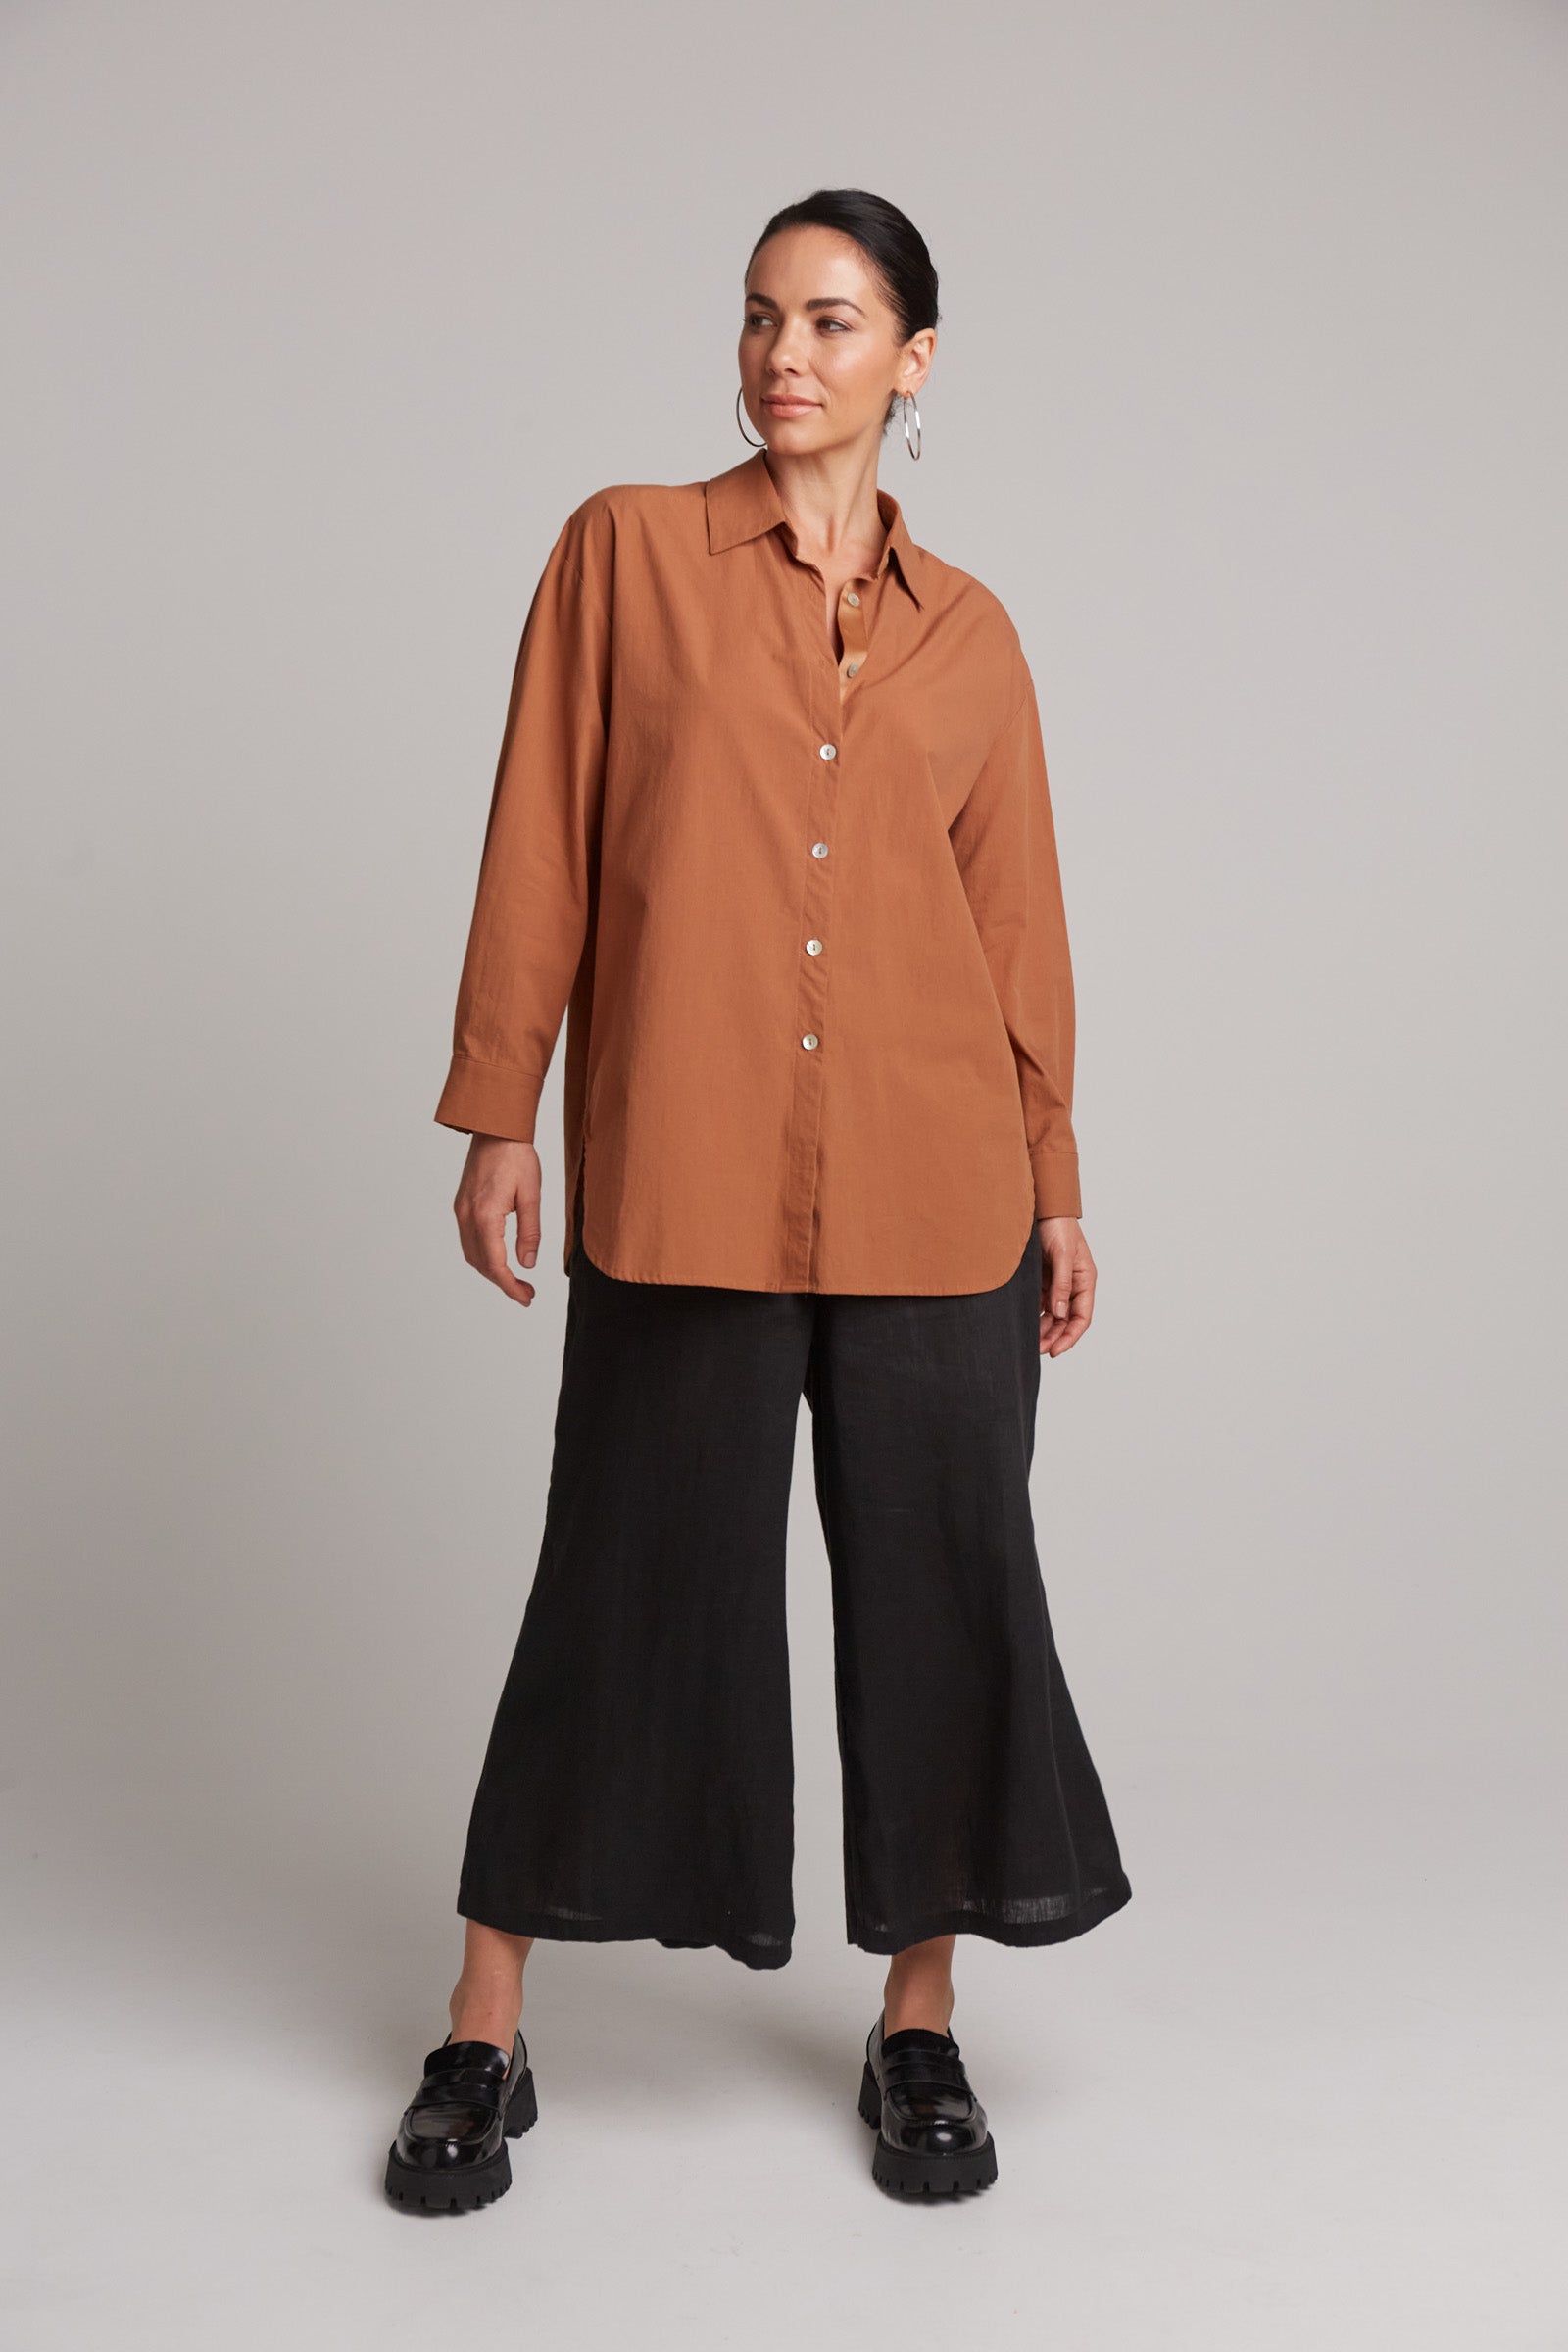 Studio Oversize Shirt - Cinnamon - eb&ive Clothing - Shirt L/S